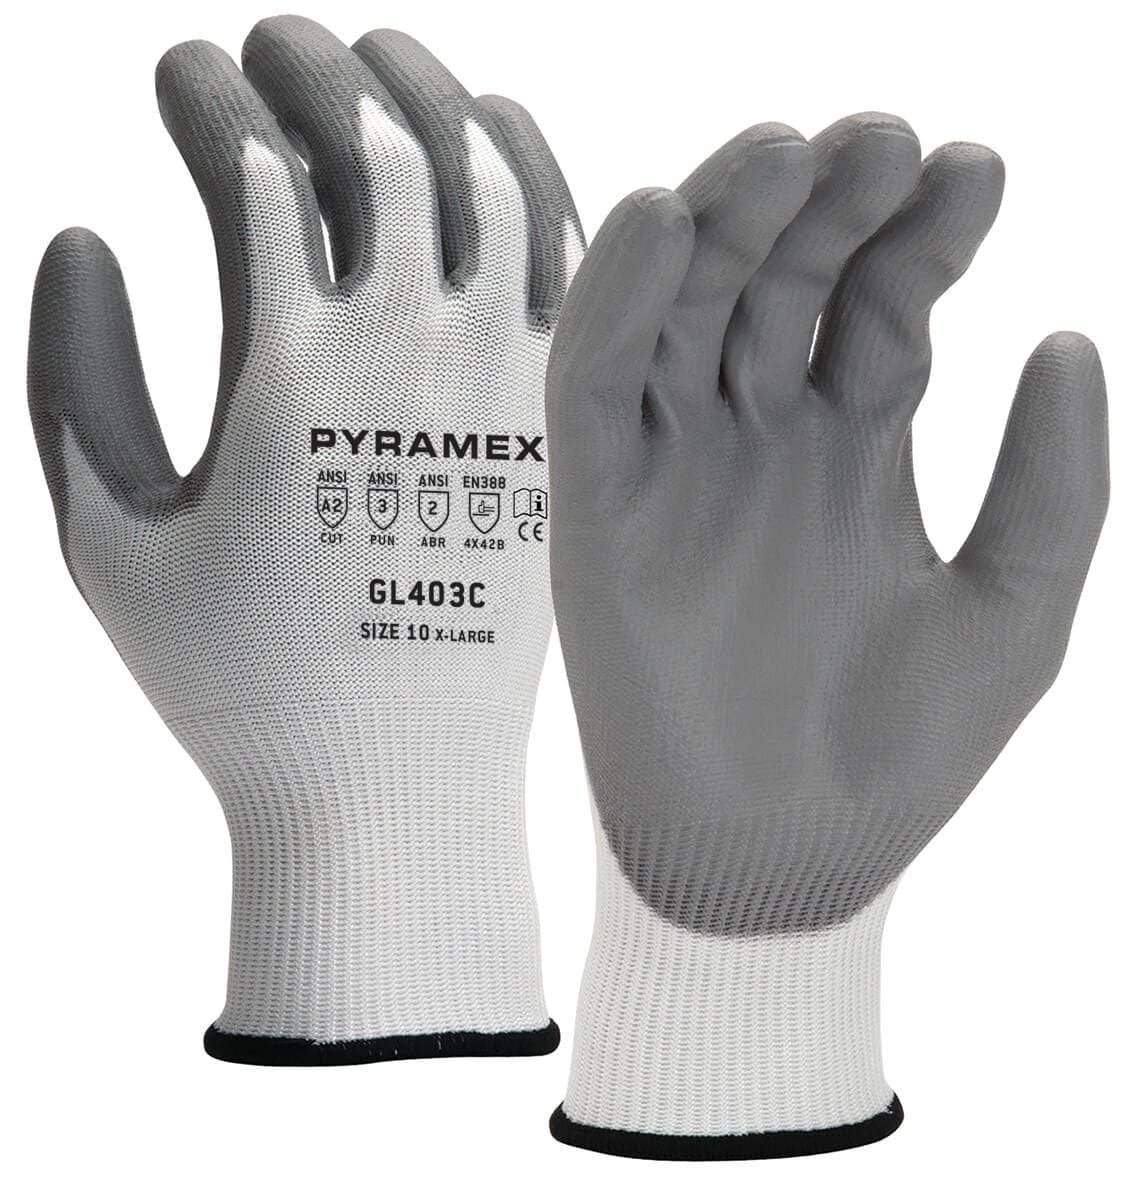 Pyramex GL403C Cut-Resistant A2 Polyurethane Dipped Gloves